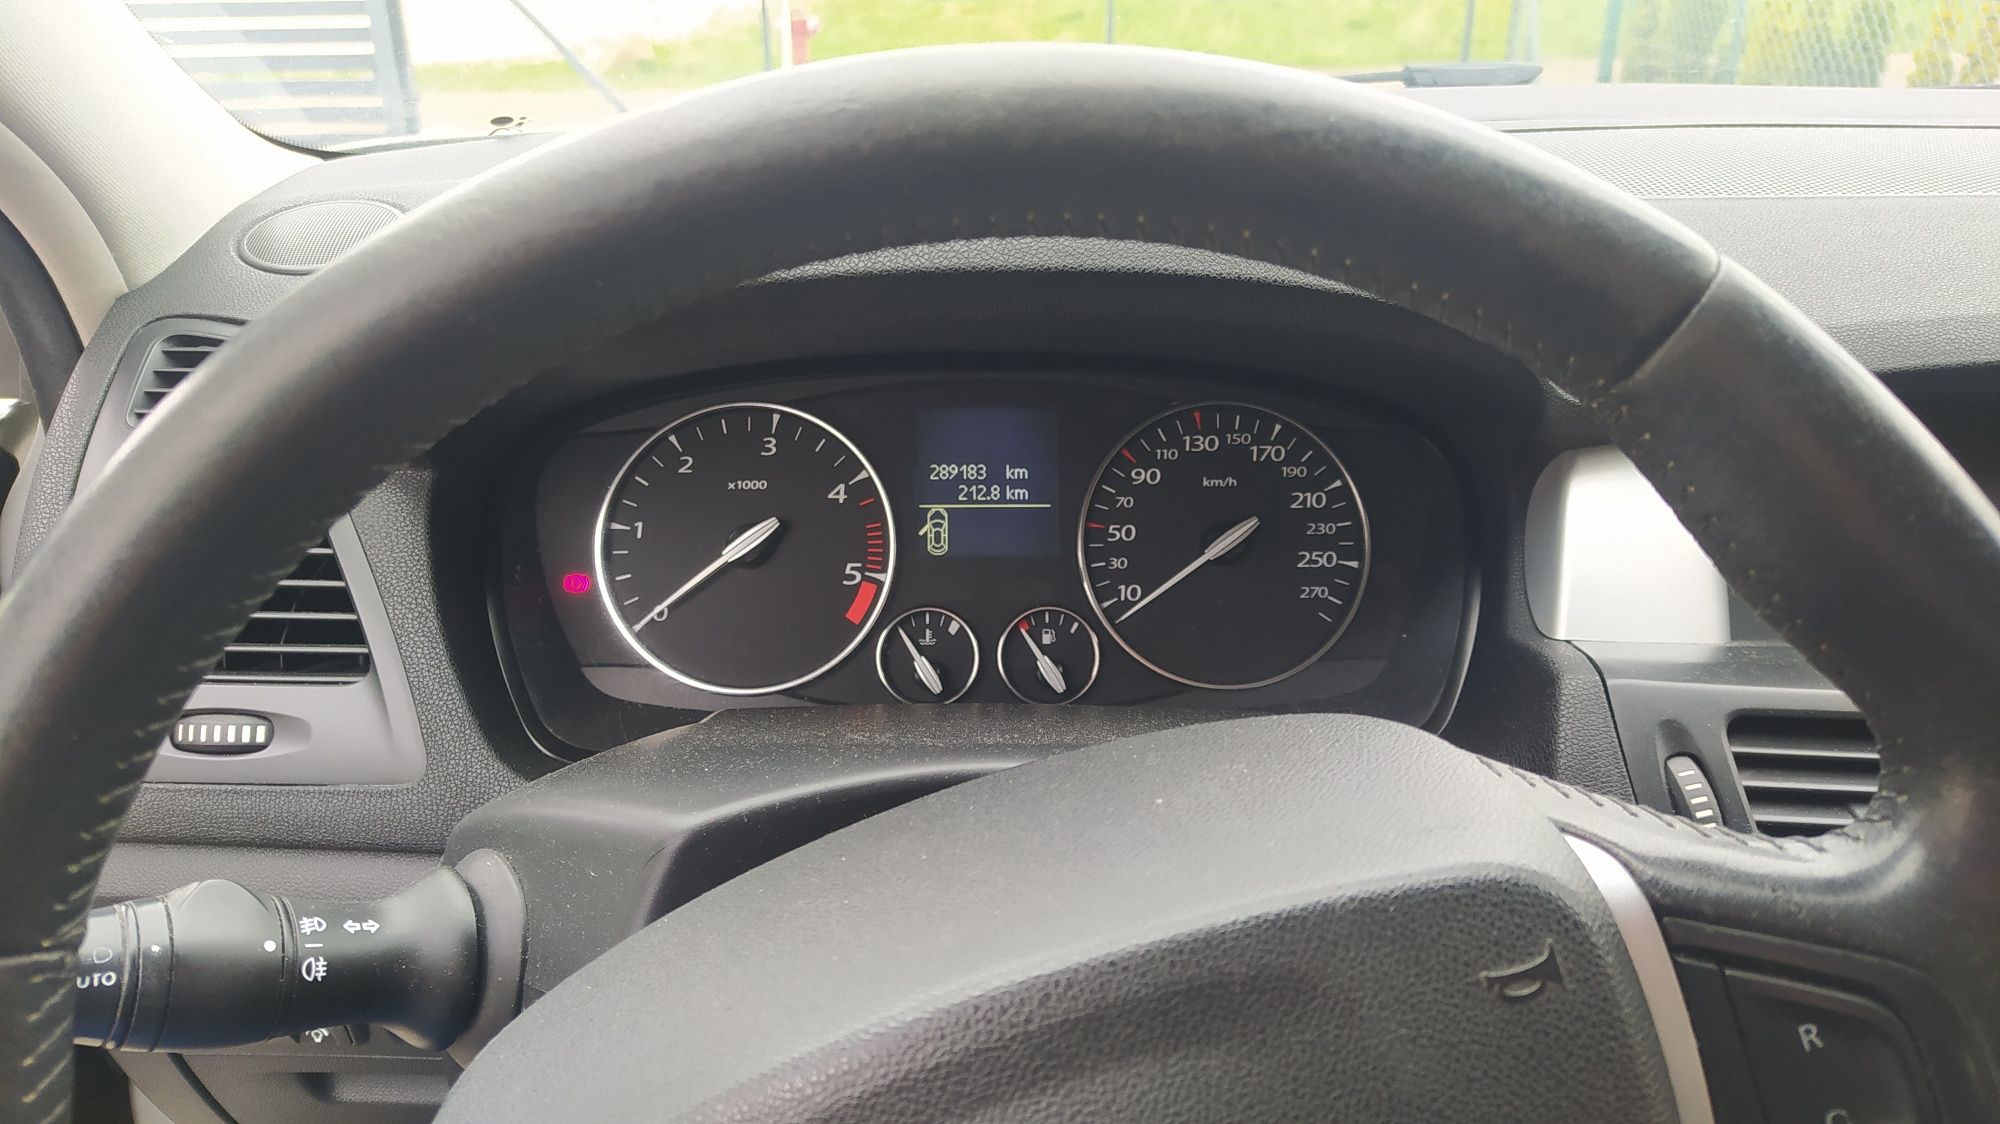 Renault Laguna 3 2.0 dCi 150km